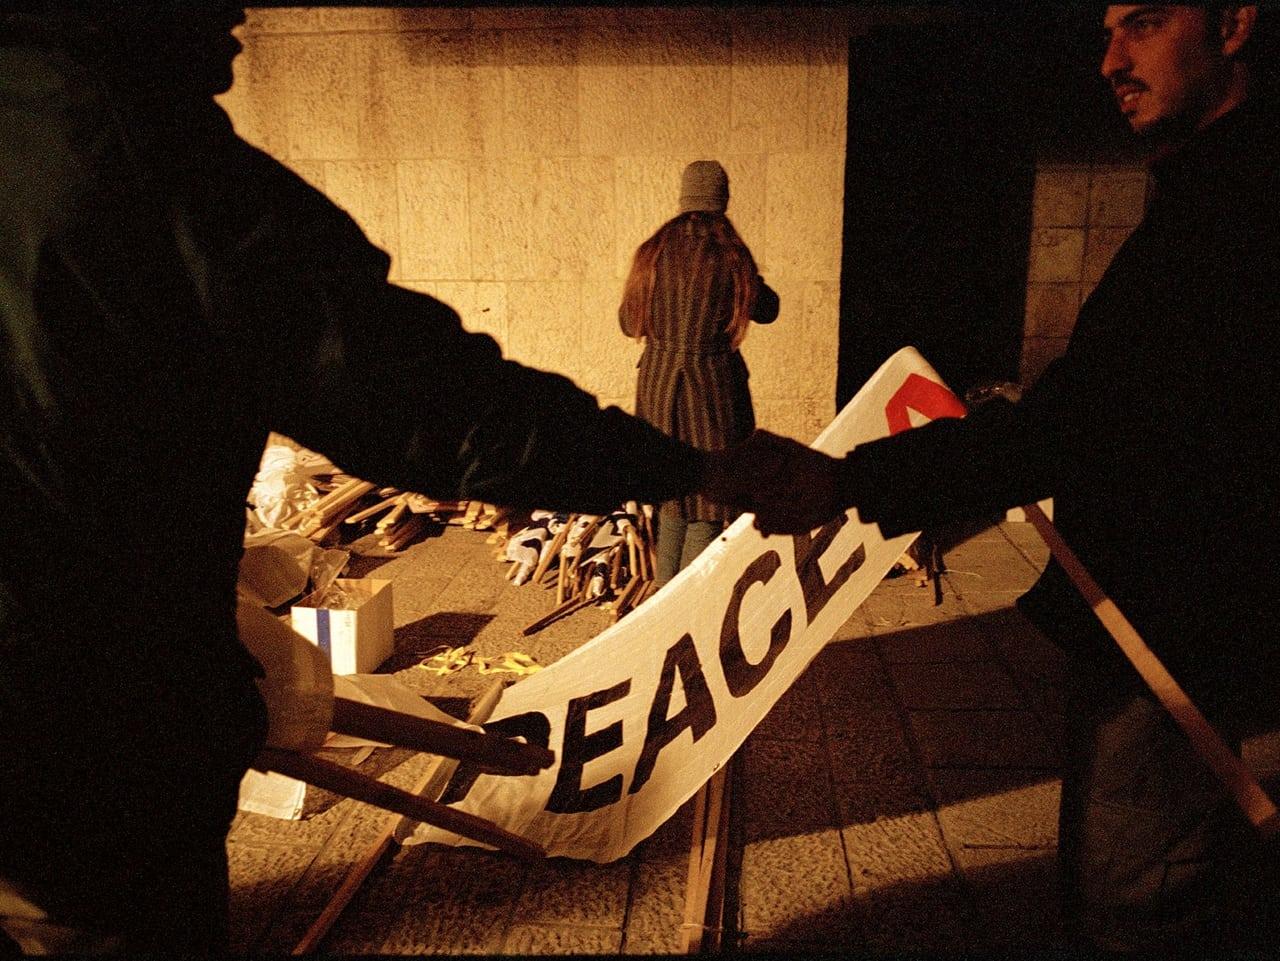 Thomas Dworzak - "Peace Now" - Manifestation, Jérusalem (février 2001). [MAGNUM PHOTOS / COURTESY CLAIRBYKAHN - THOMAS DWORZAK]